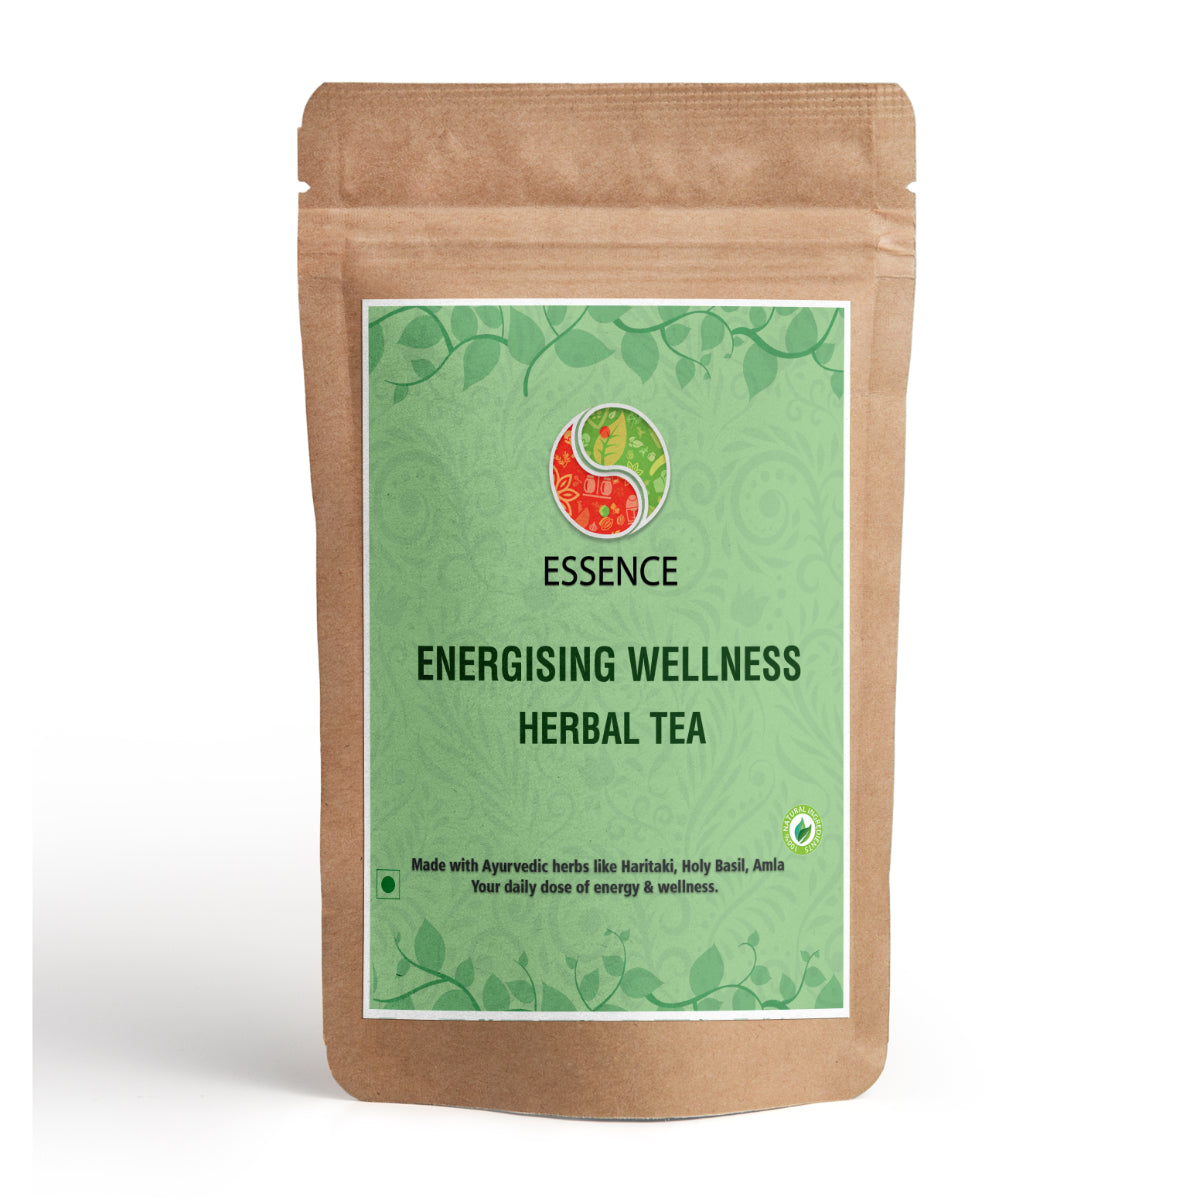 Essence Energizing Wellness Herbal Tea, with Licorice, Holy Basil, Haritaki, Caffeine Free - 200GM